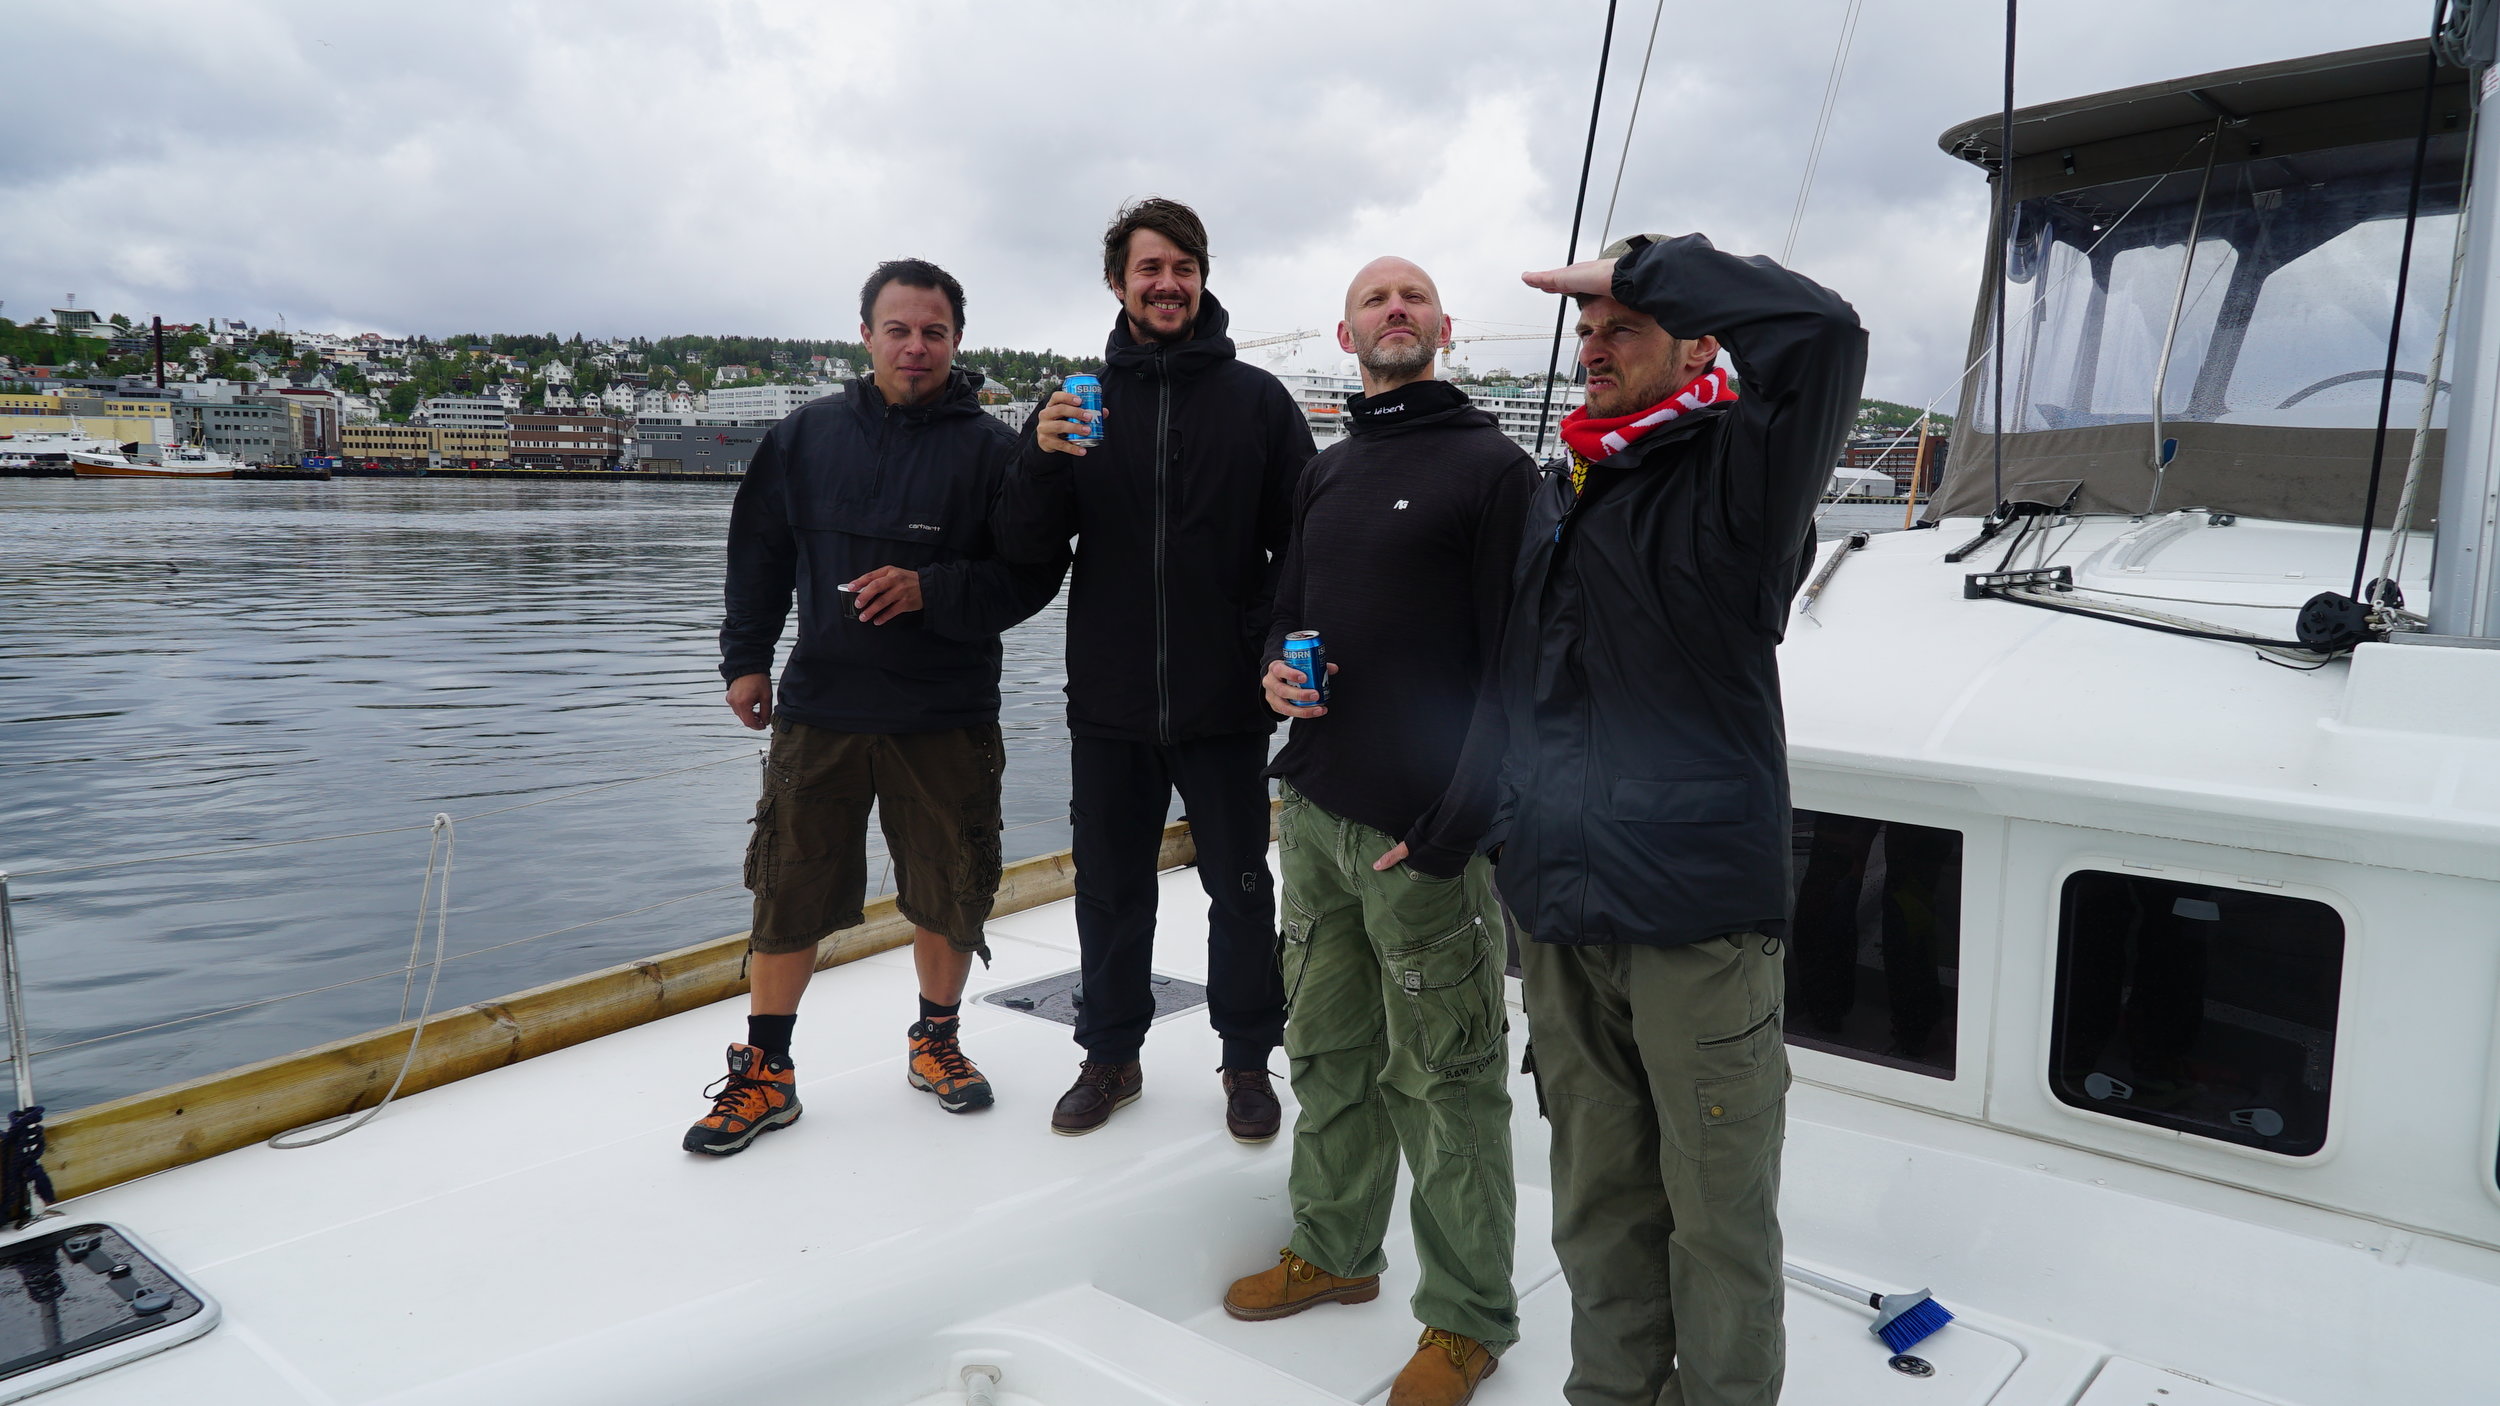 Utdrikningslag | #Tromsø | #Sail and Relax